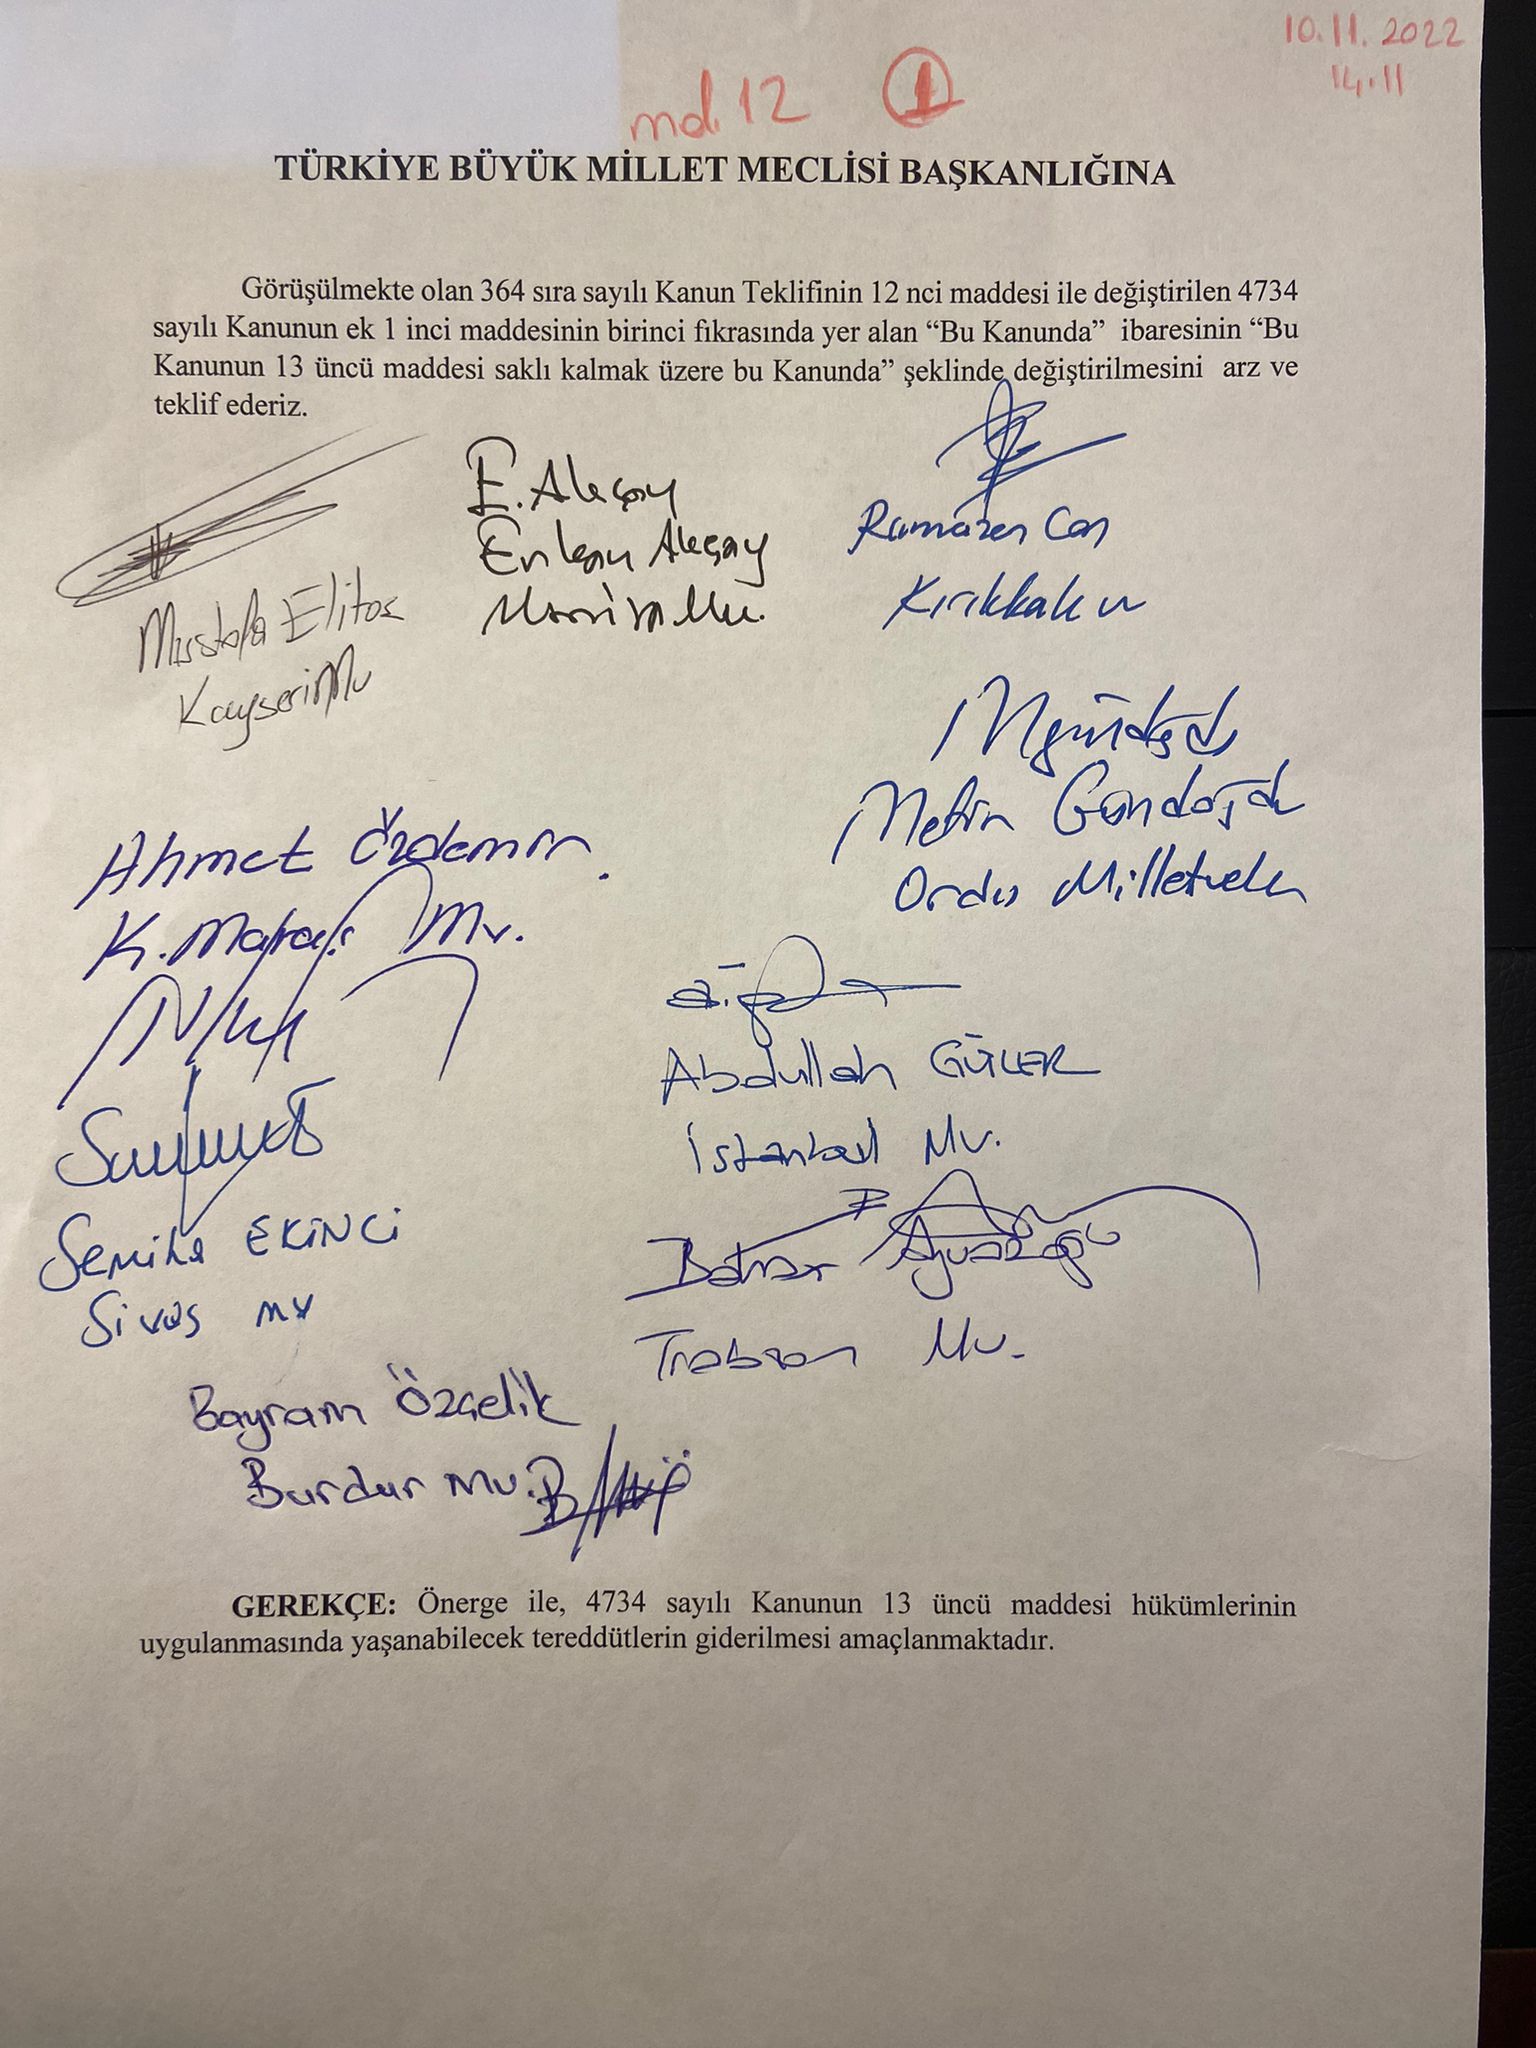 Trabzon Milletvekili Ayvazoğlu'ndan Basın Kanunu'na imza!